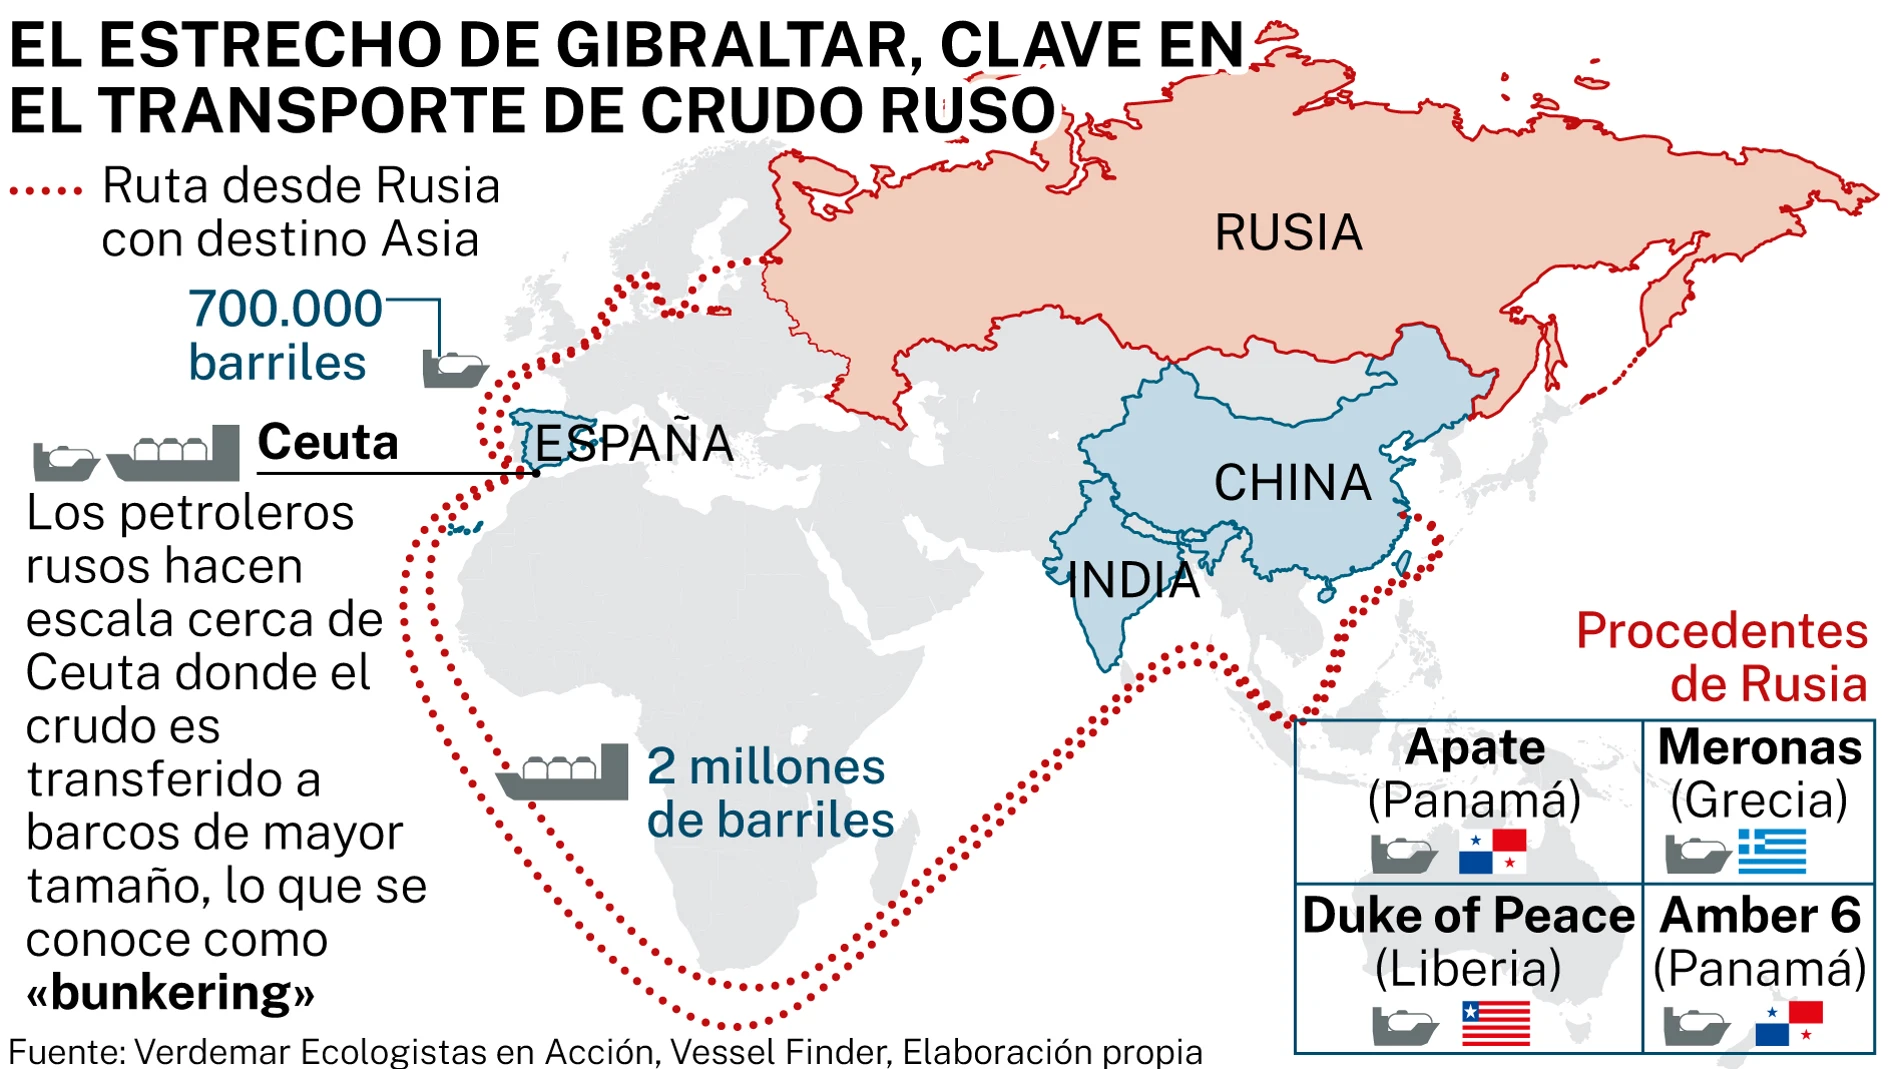 Ruta asiática de los petroleros rusos